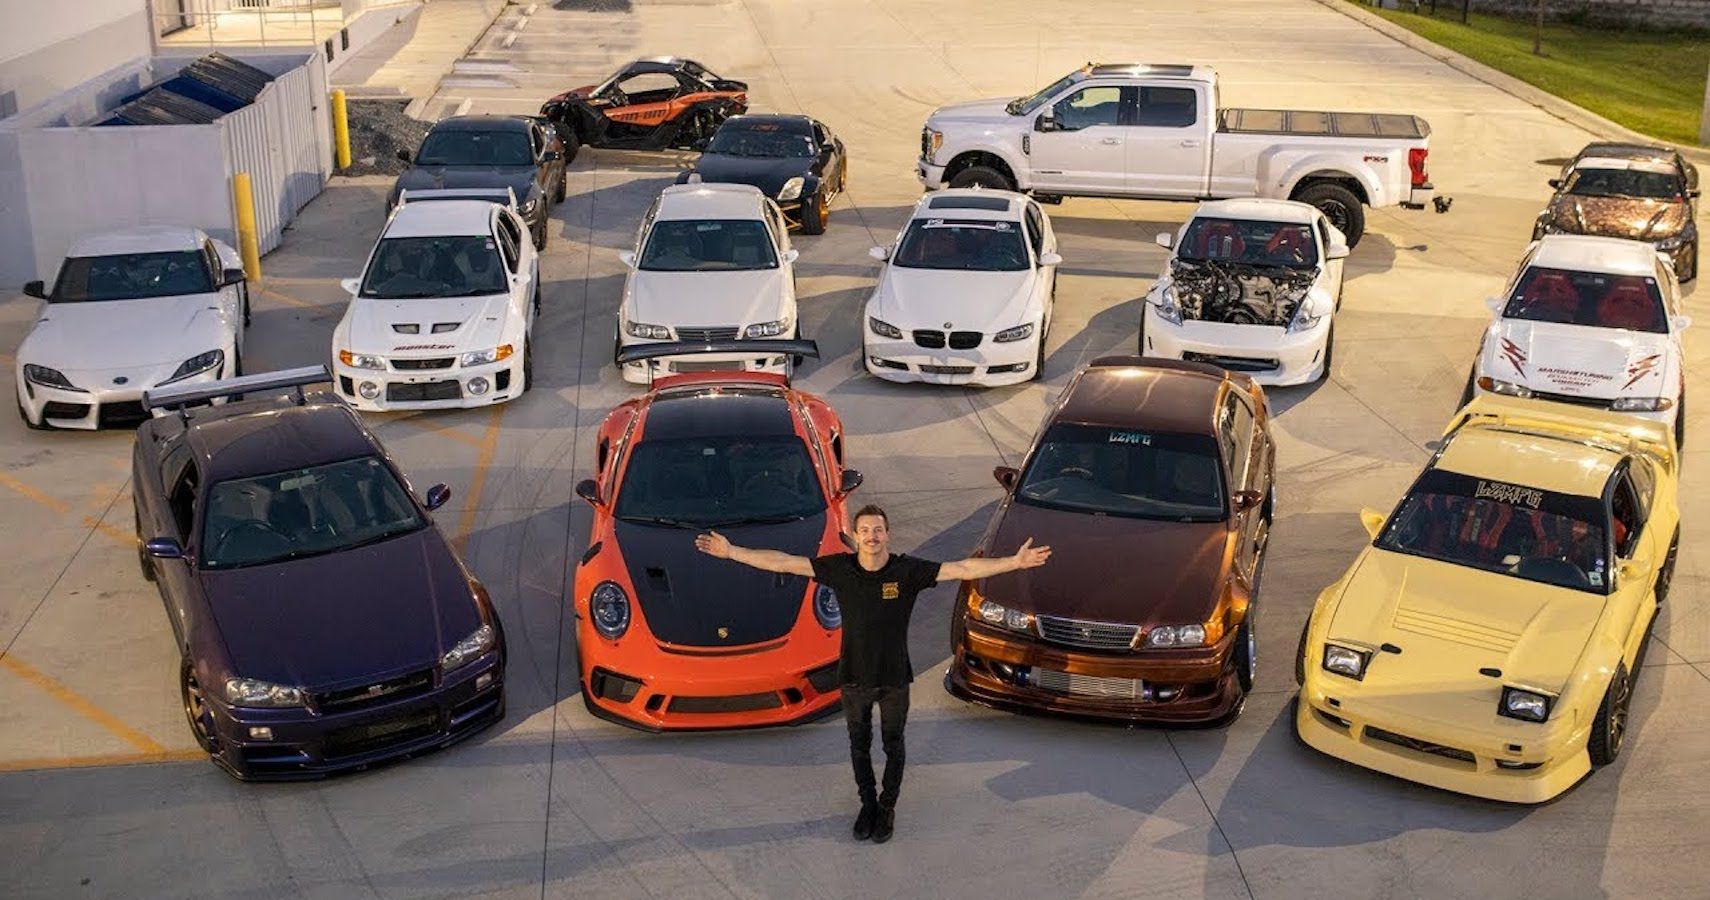 Adam LZ's car collection